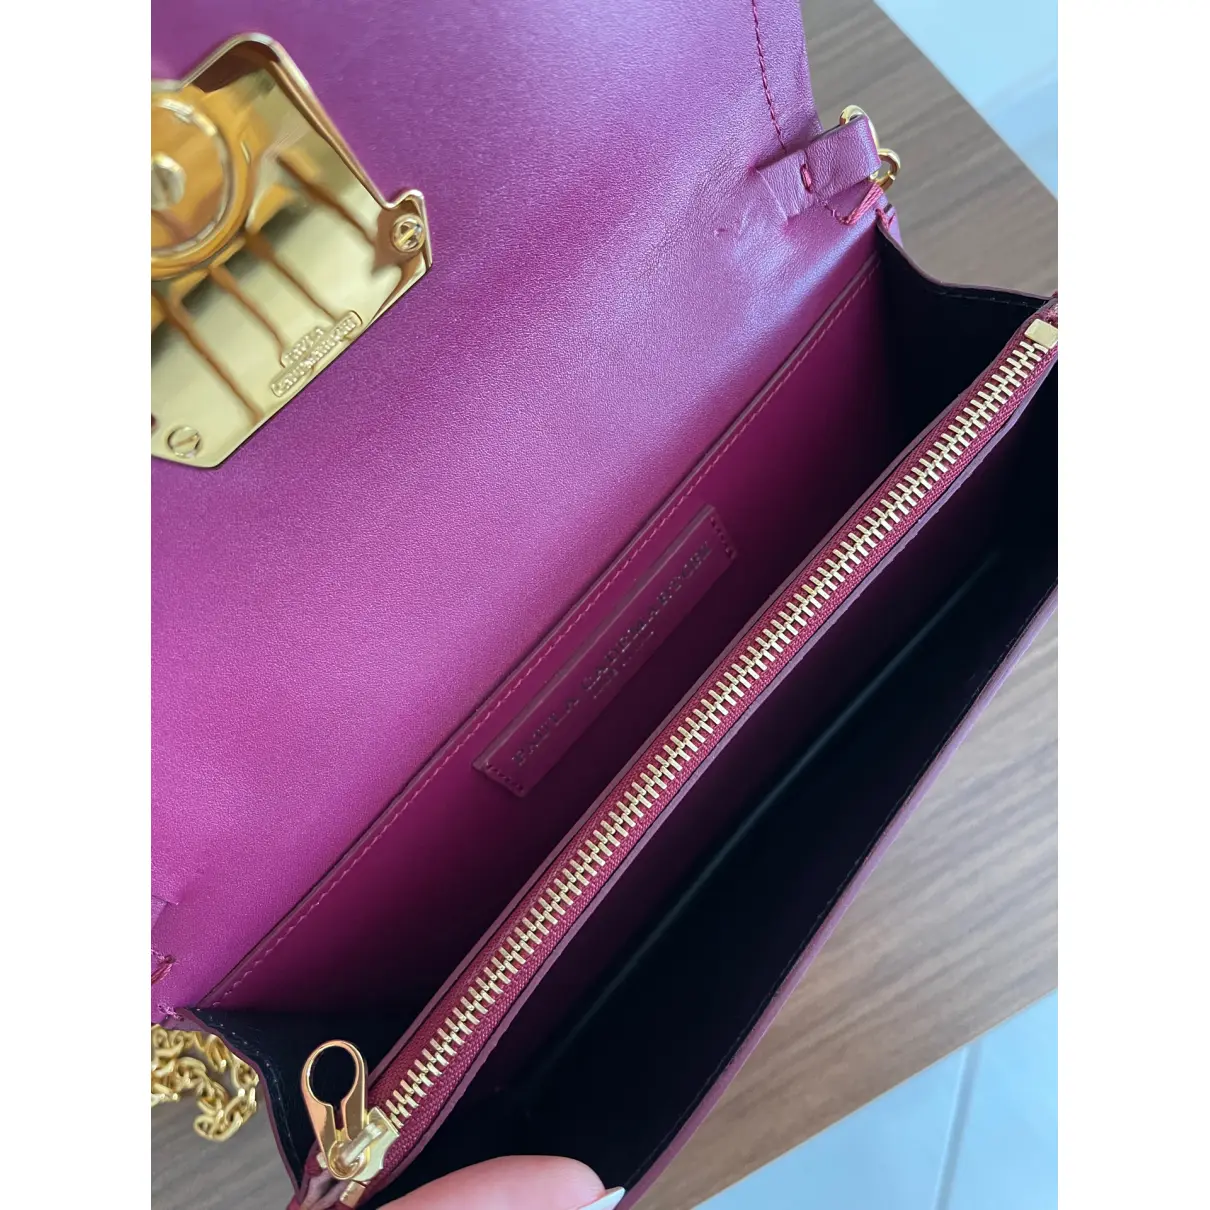 Luxury Paula Cademartori Handbags Women